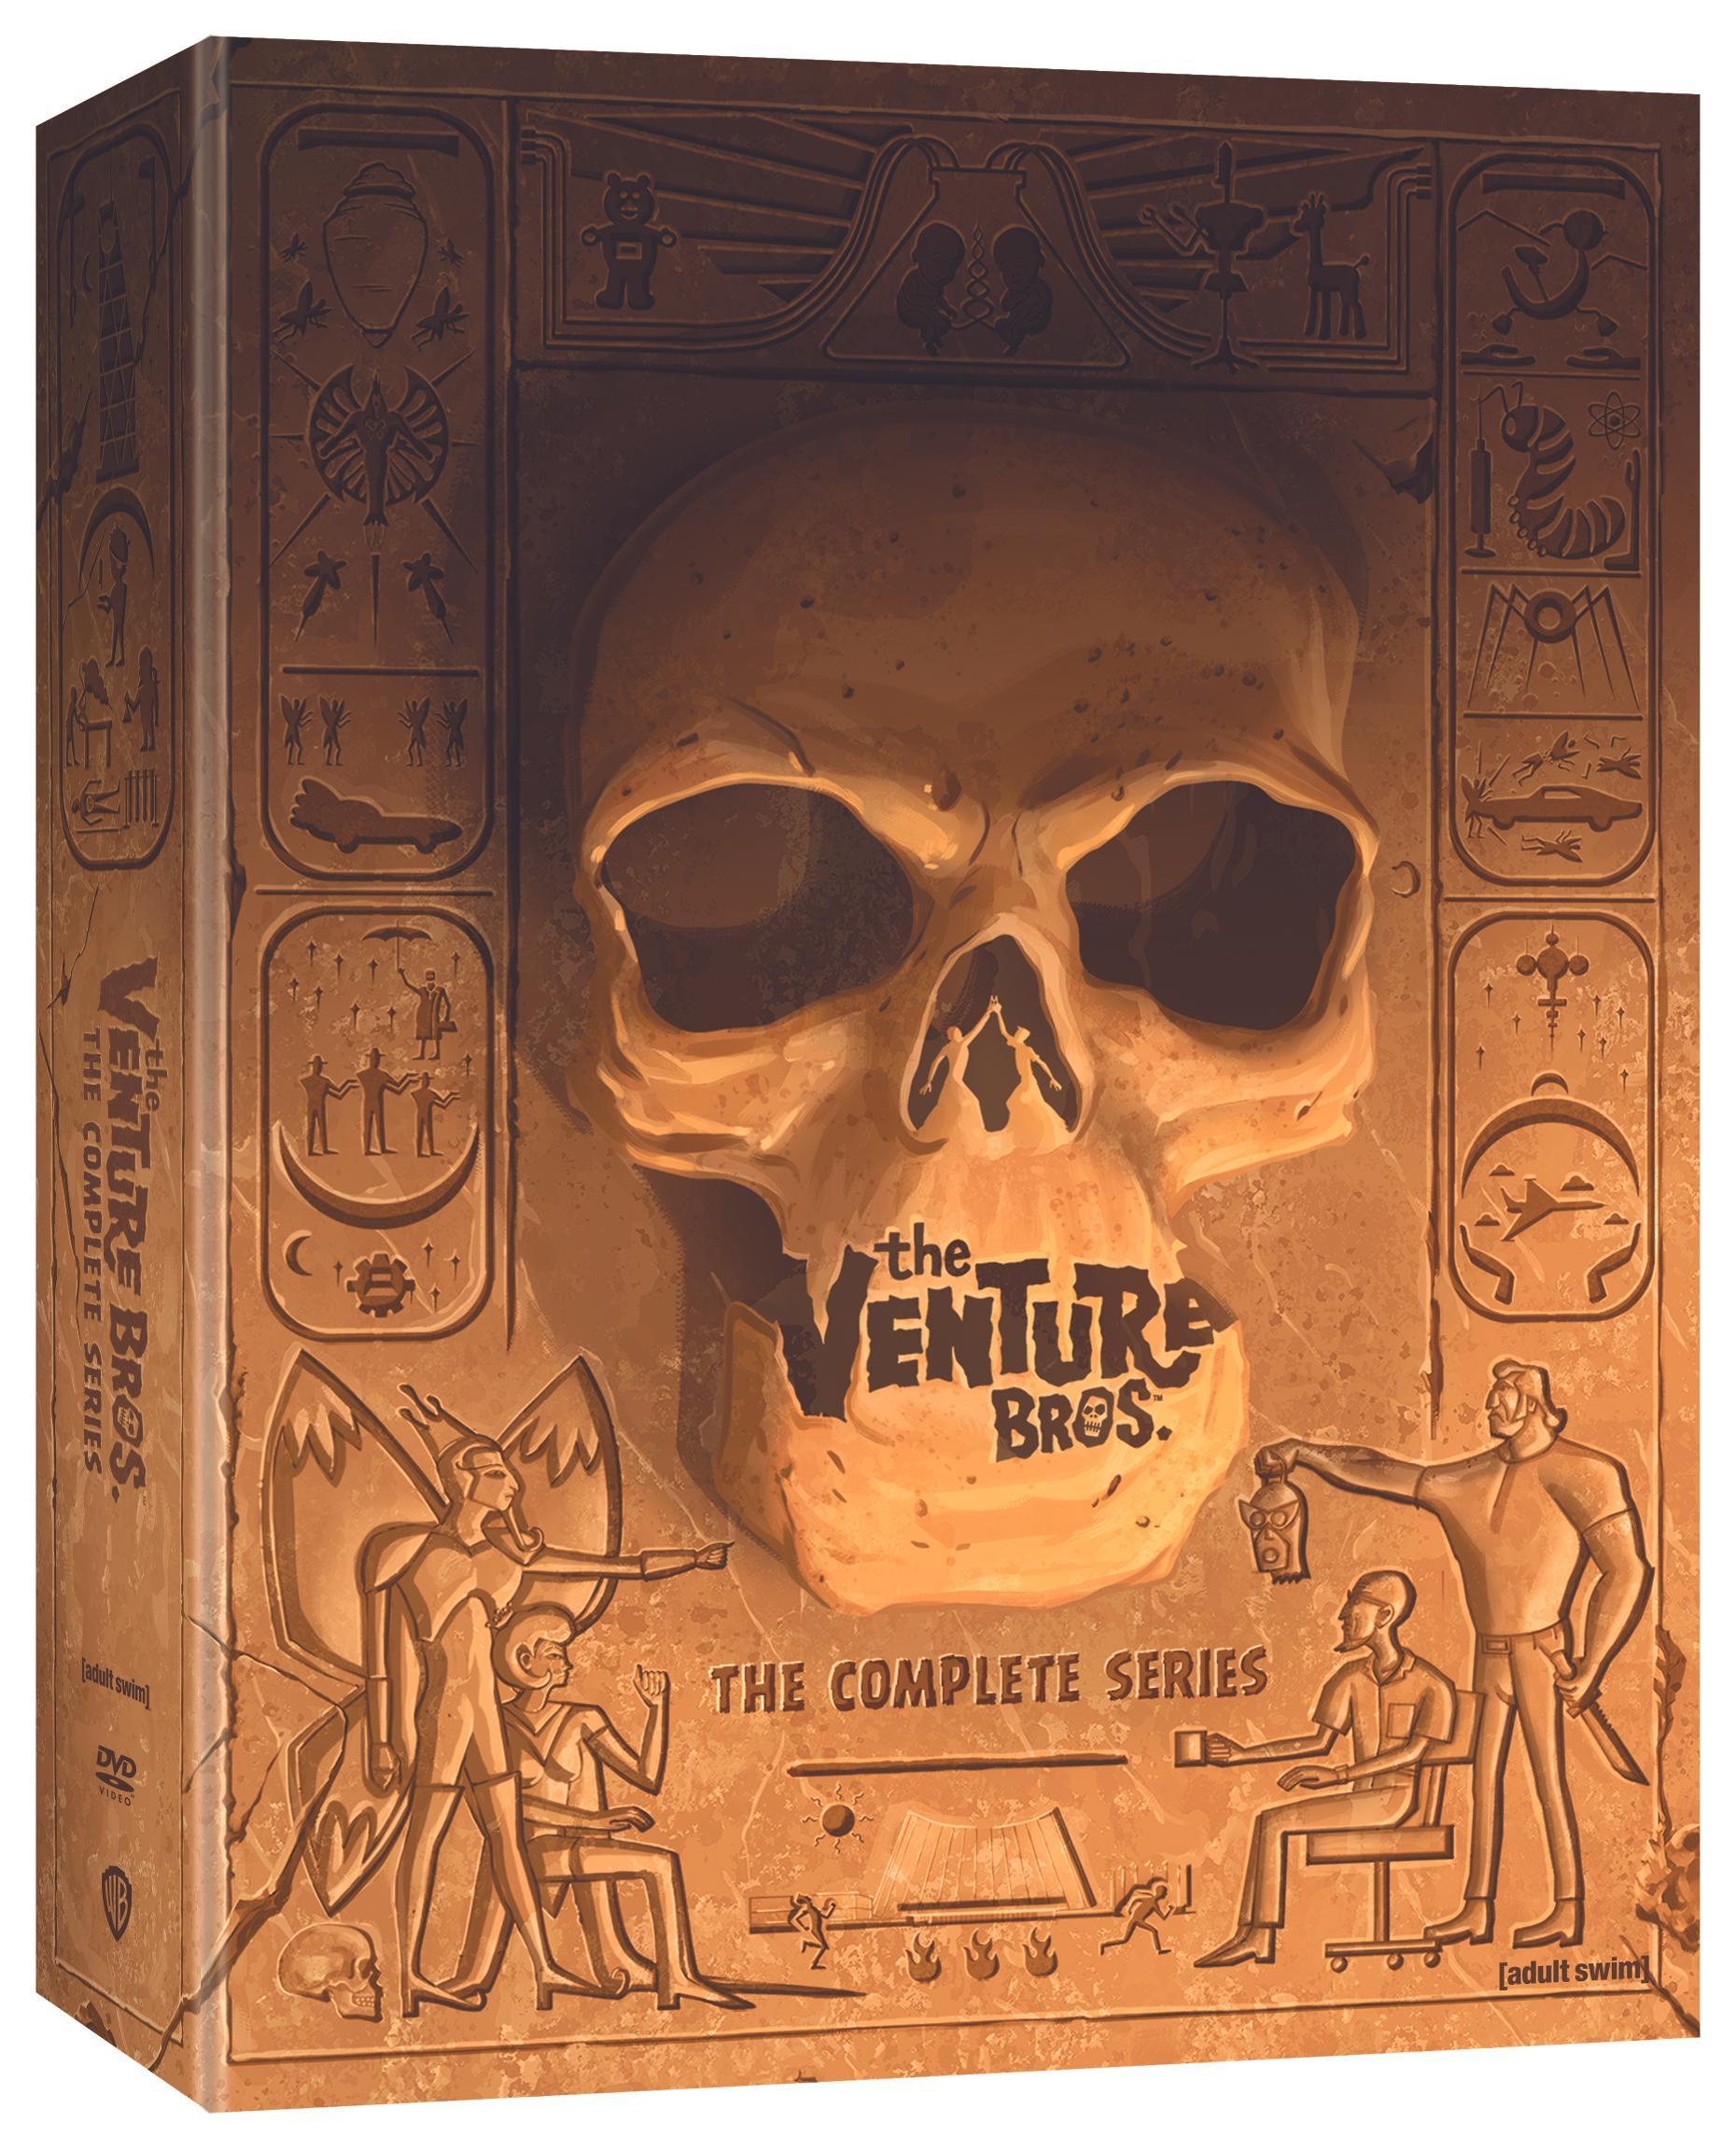 The Venture Bros Complete Series DVD Box Art1